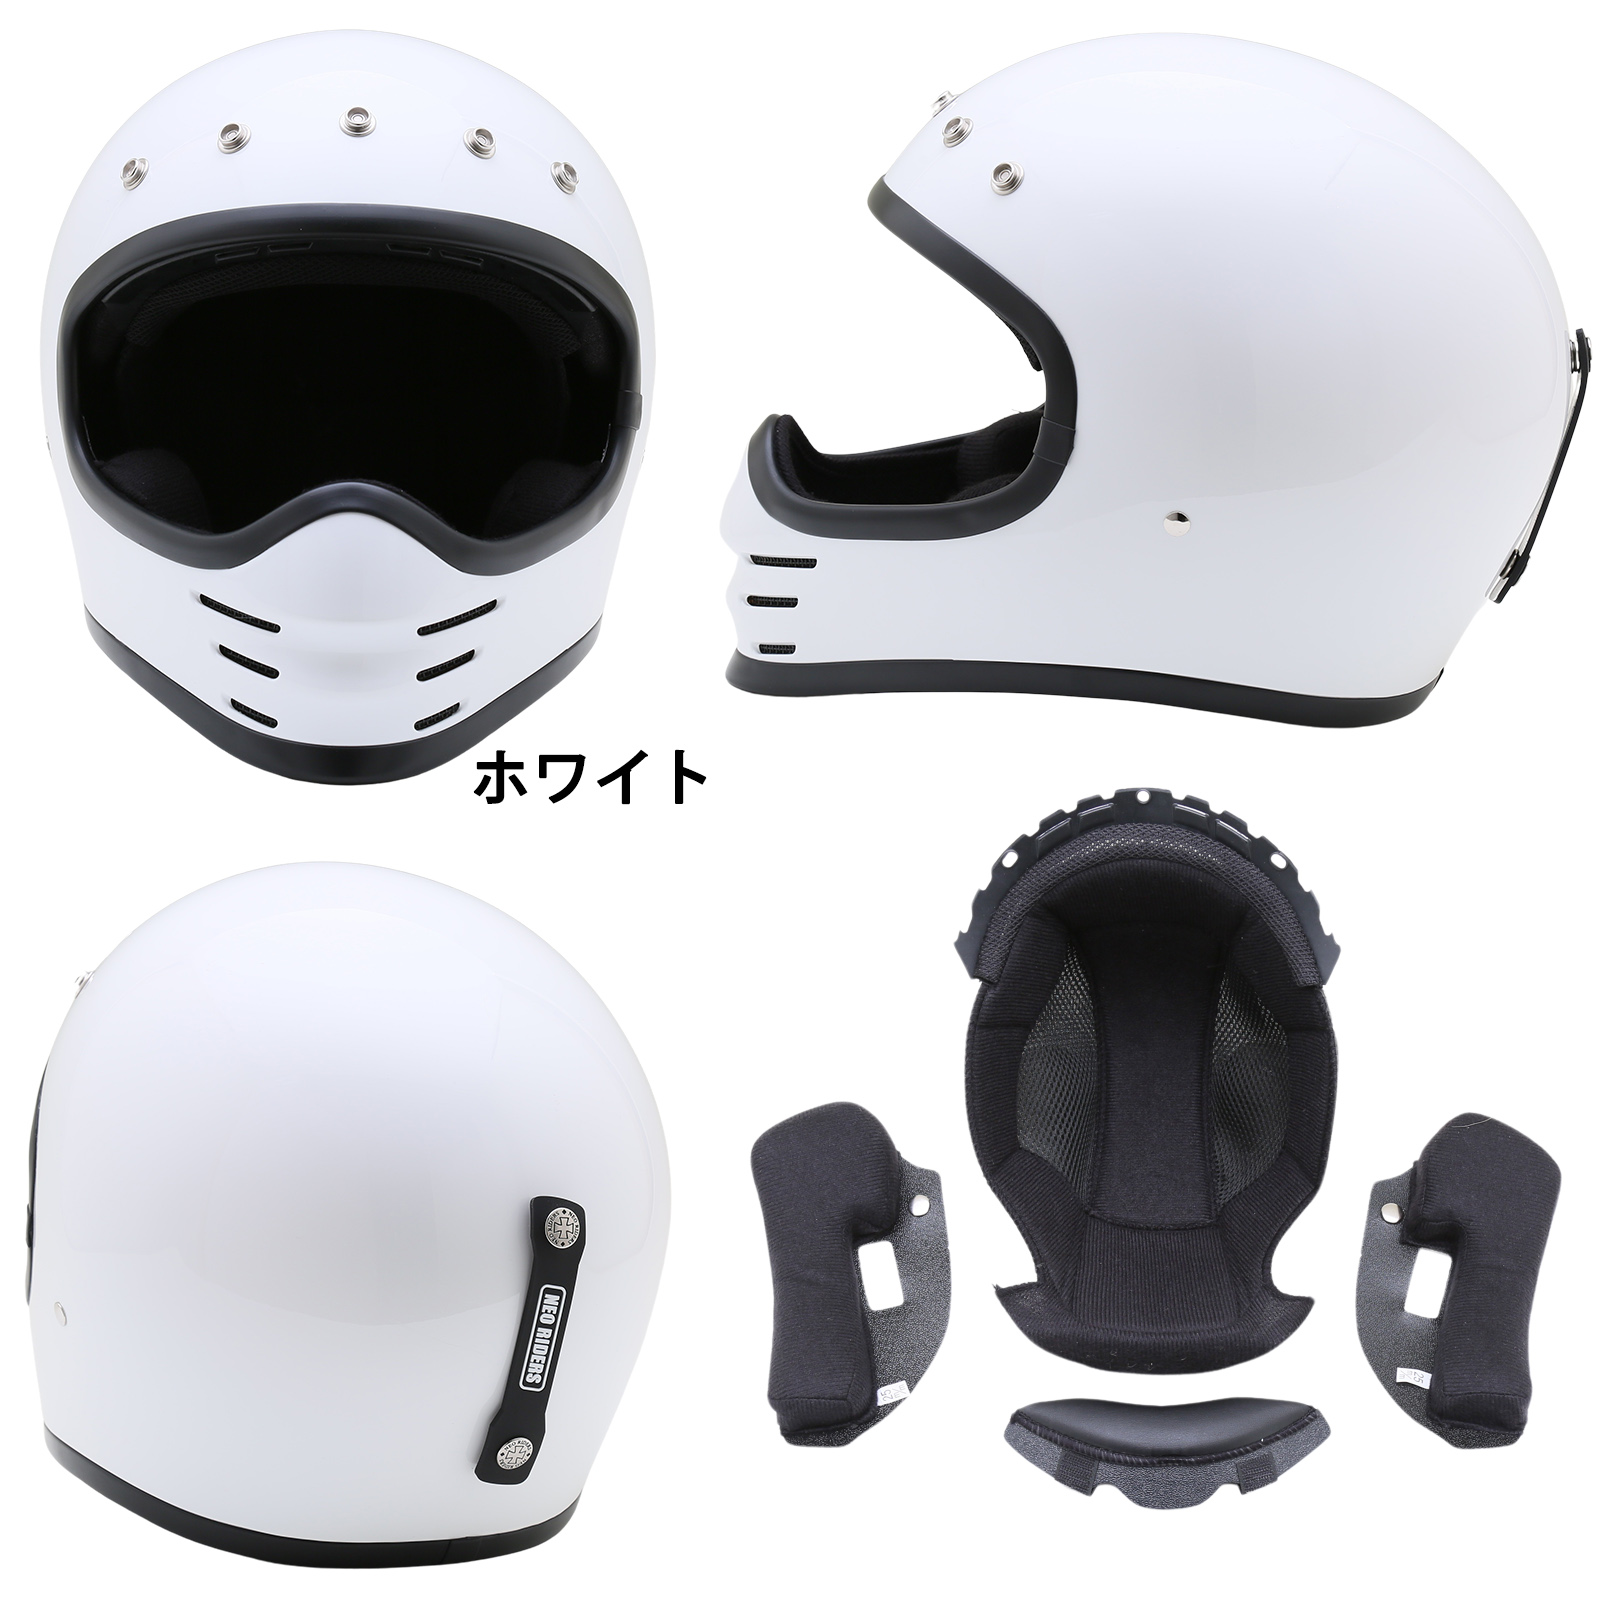  мотоцикл шлем [ Revue сотрудничество . подарок ] ZRR все 8 цвет full-face шлем (SG/PSC есть ) очки очки разрез ввод NEORIDERS